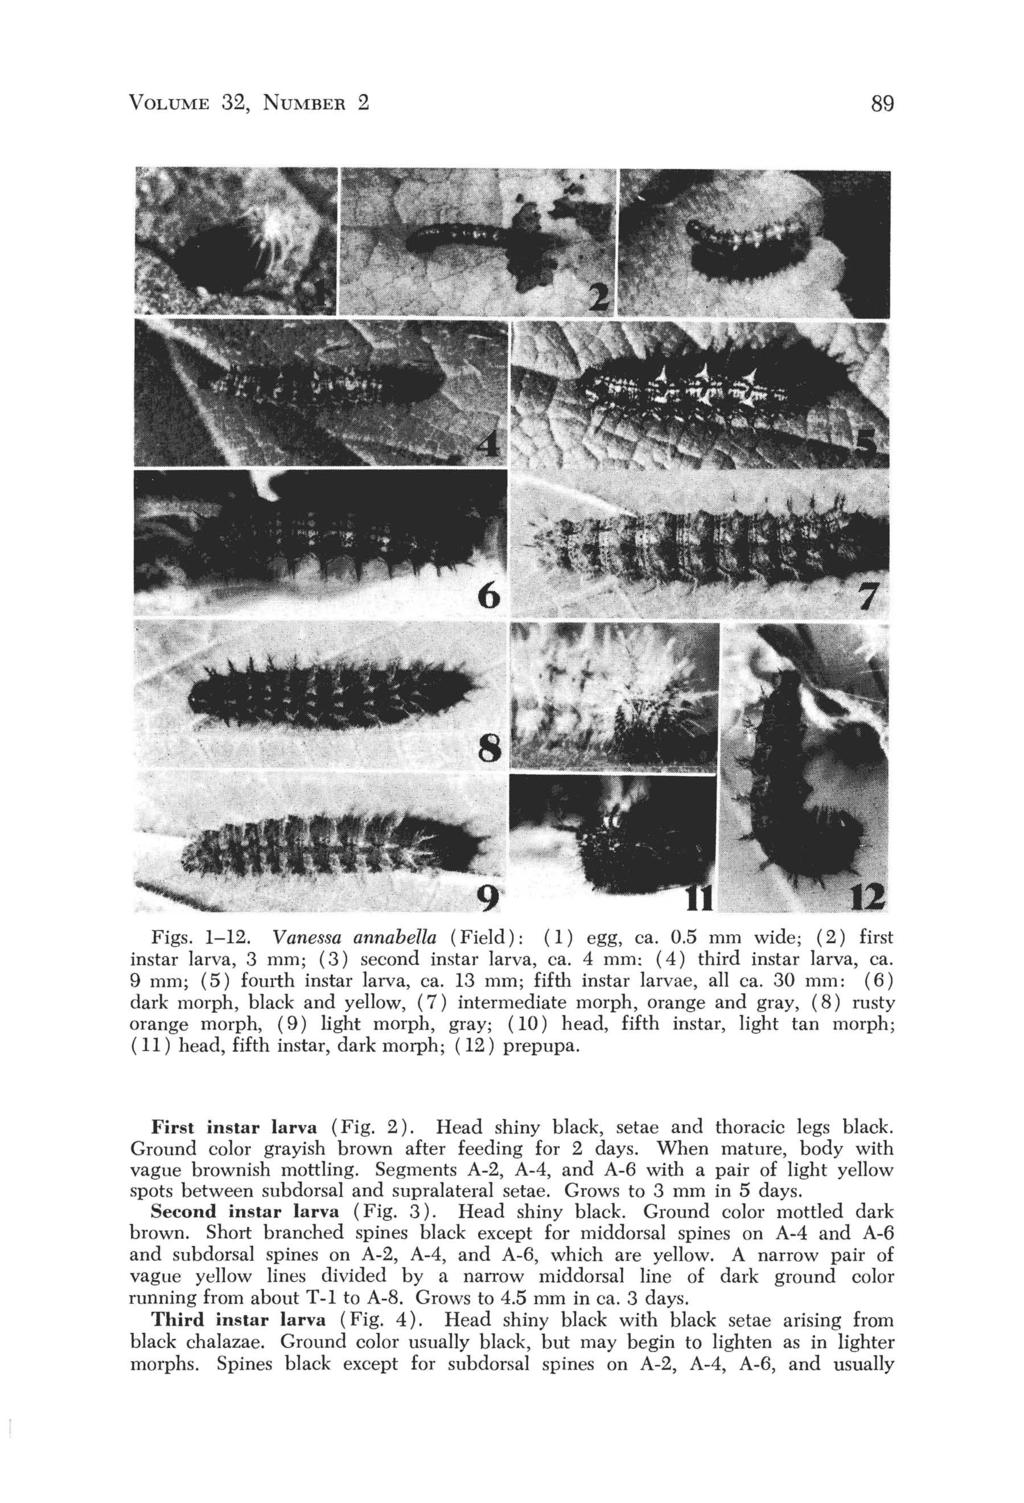 VOLUME 32, NUMBER 2 89 Figs. 1-12. Vanessa annabella (Field): (1) egg, ca. 0.5 mm wide; (2) first ins tar larva, 3 mm; (3) second instal' larva, ca. 4 mm: (4) third instal' larva, ca.